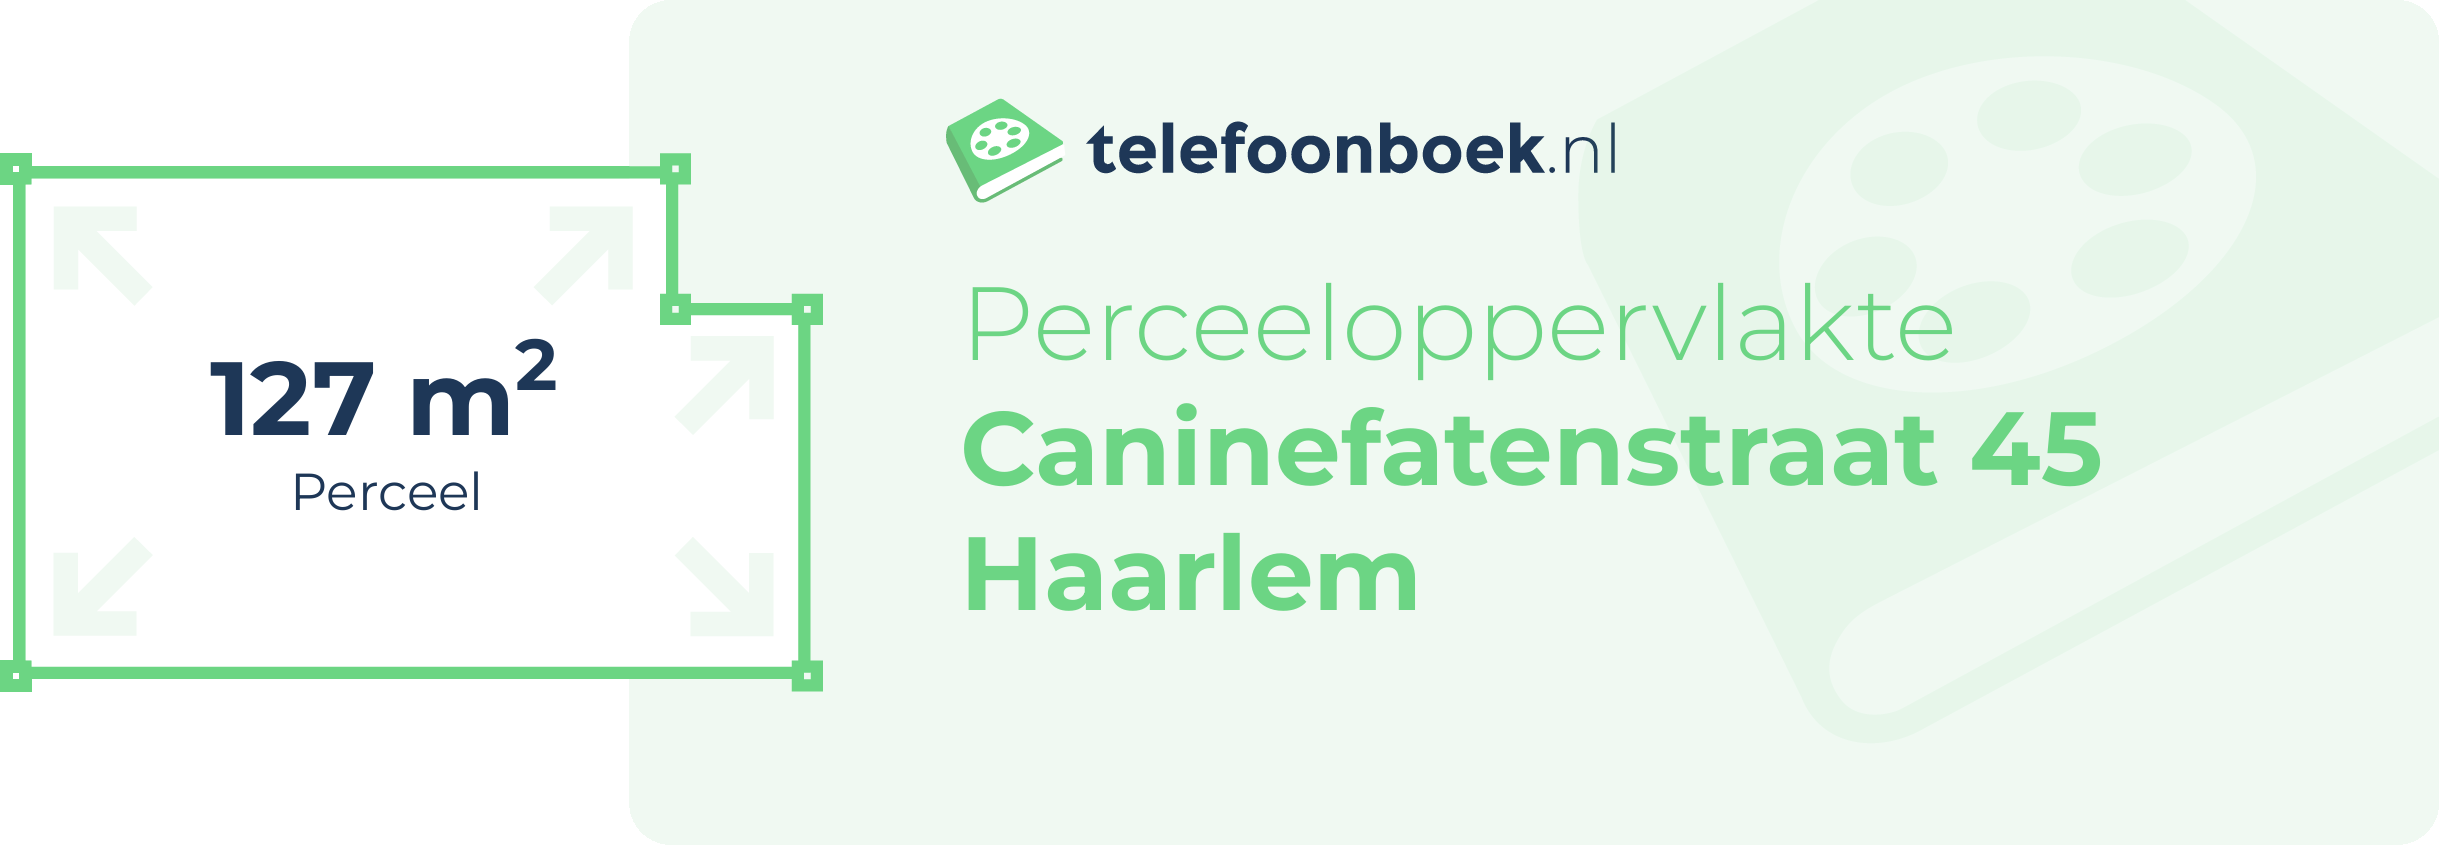 Perceeloppervlakte Caninefatenstraat 45 Haarlem